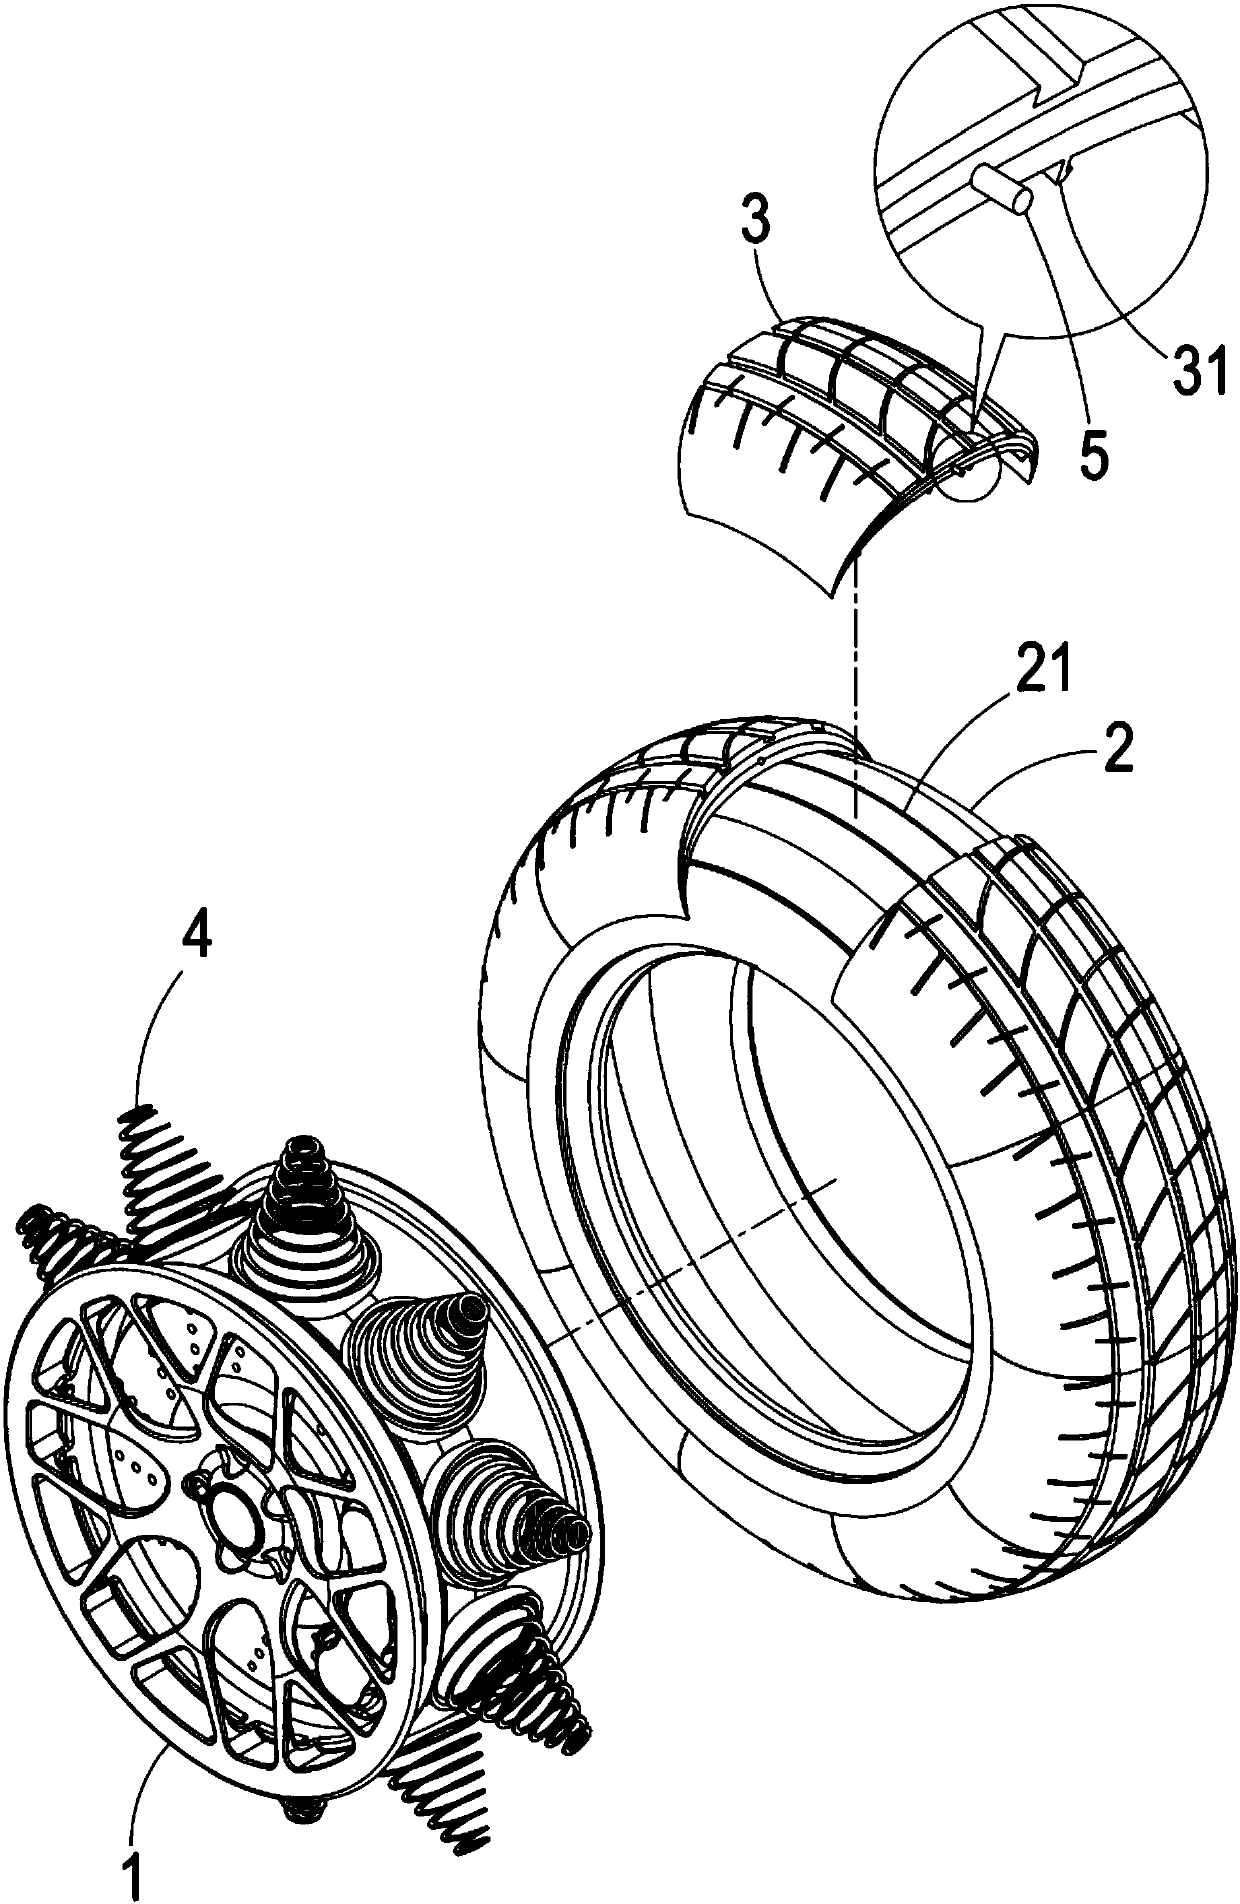 Structure improvement of wheel